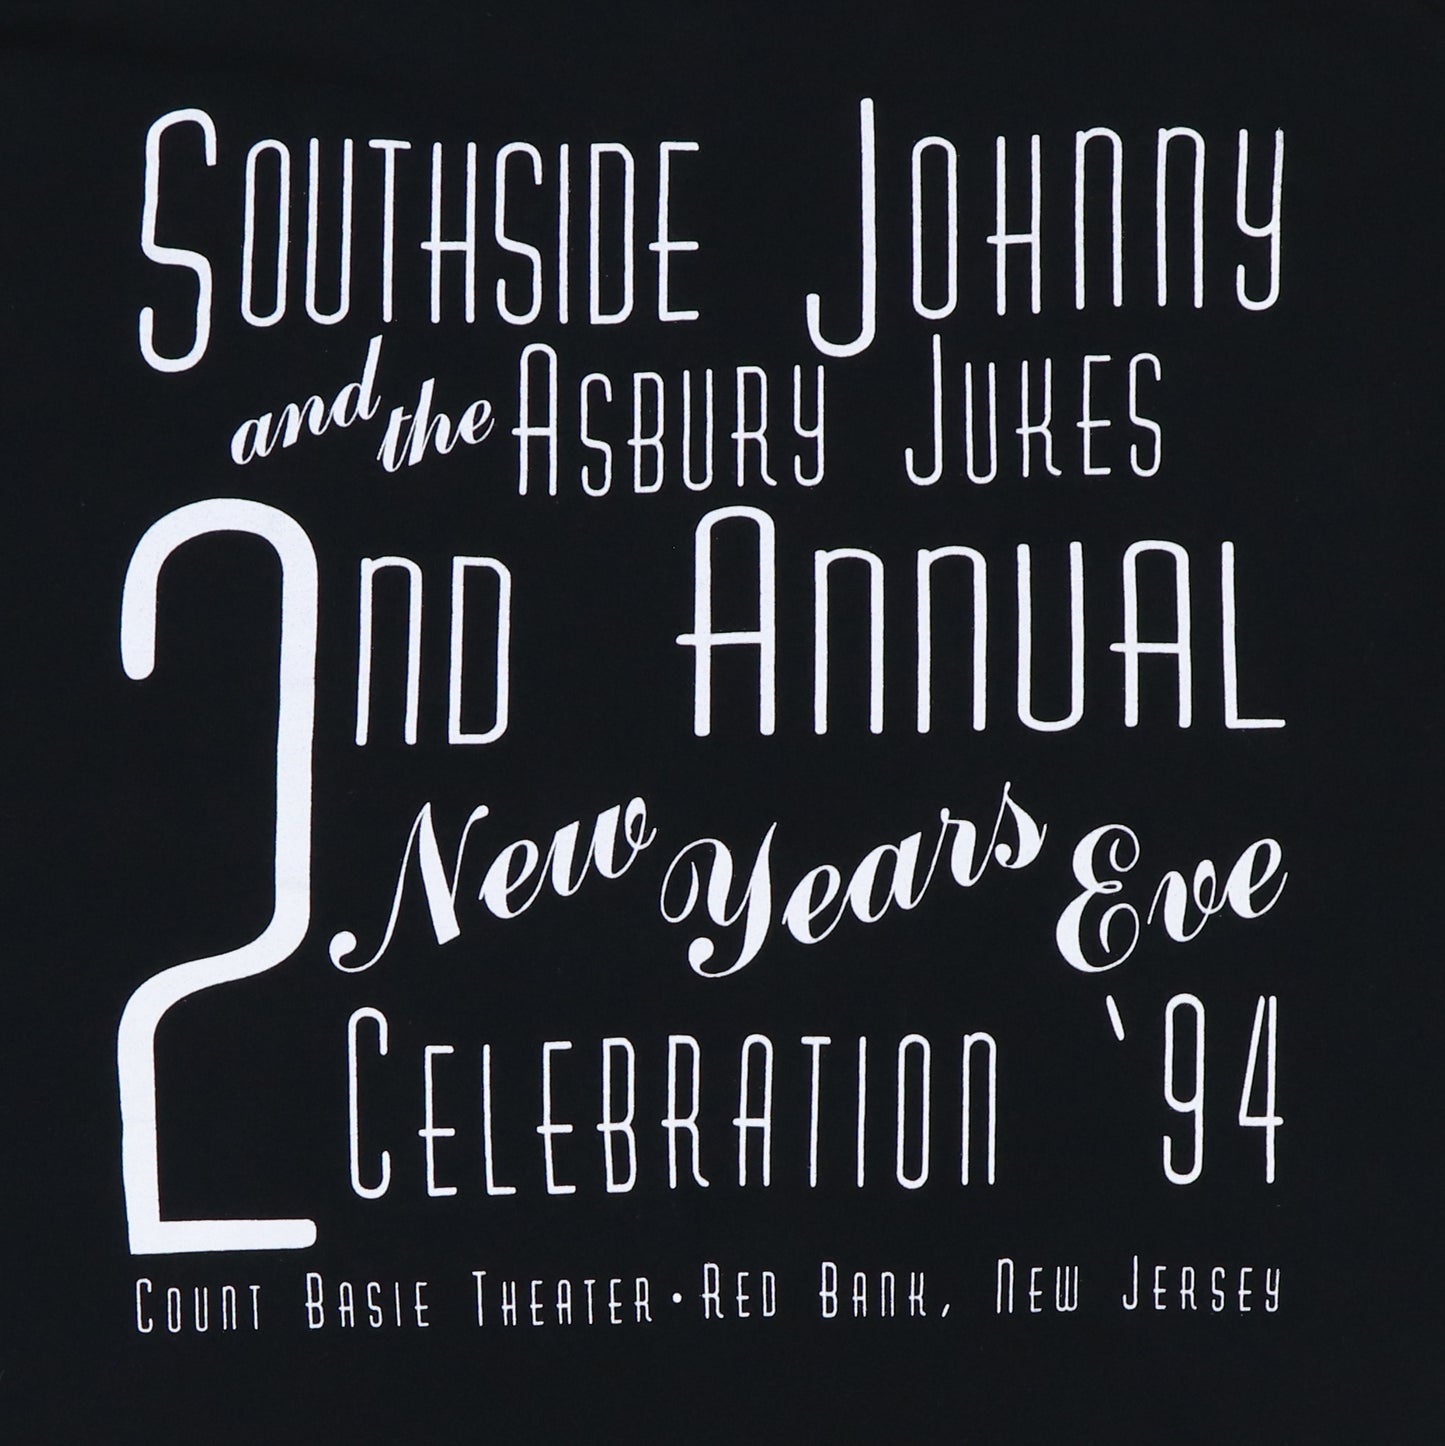 1994 Southside Johnny Asbury Jukes Concert Shirt